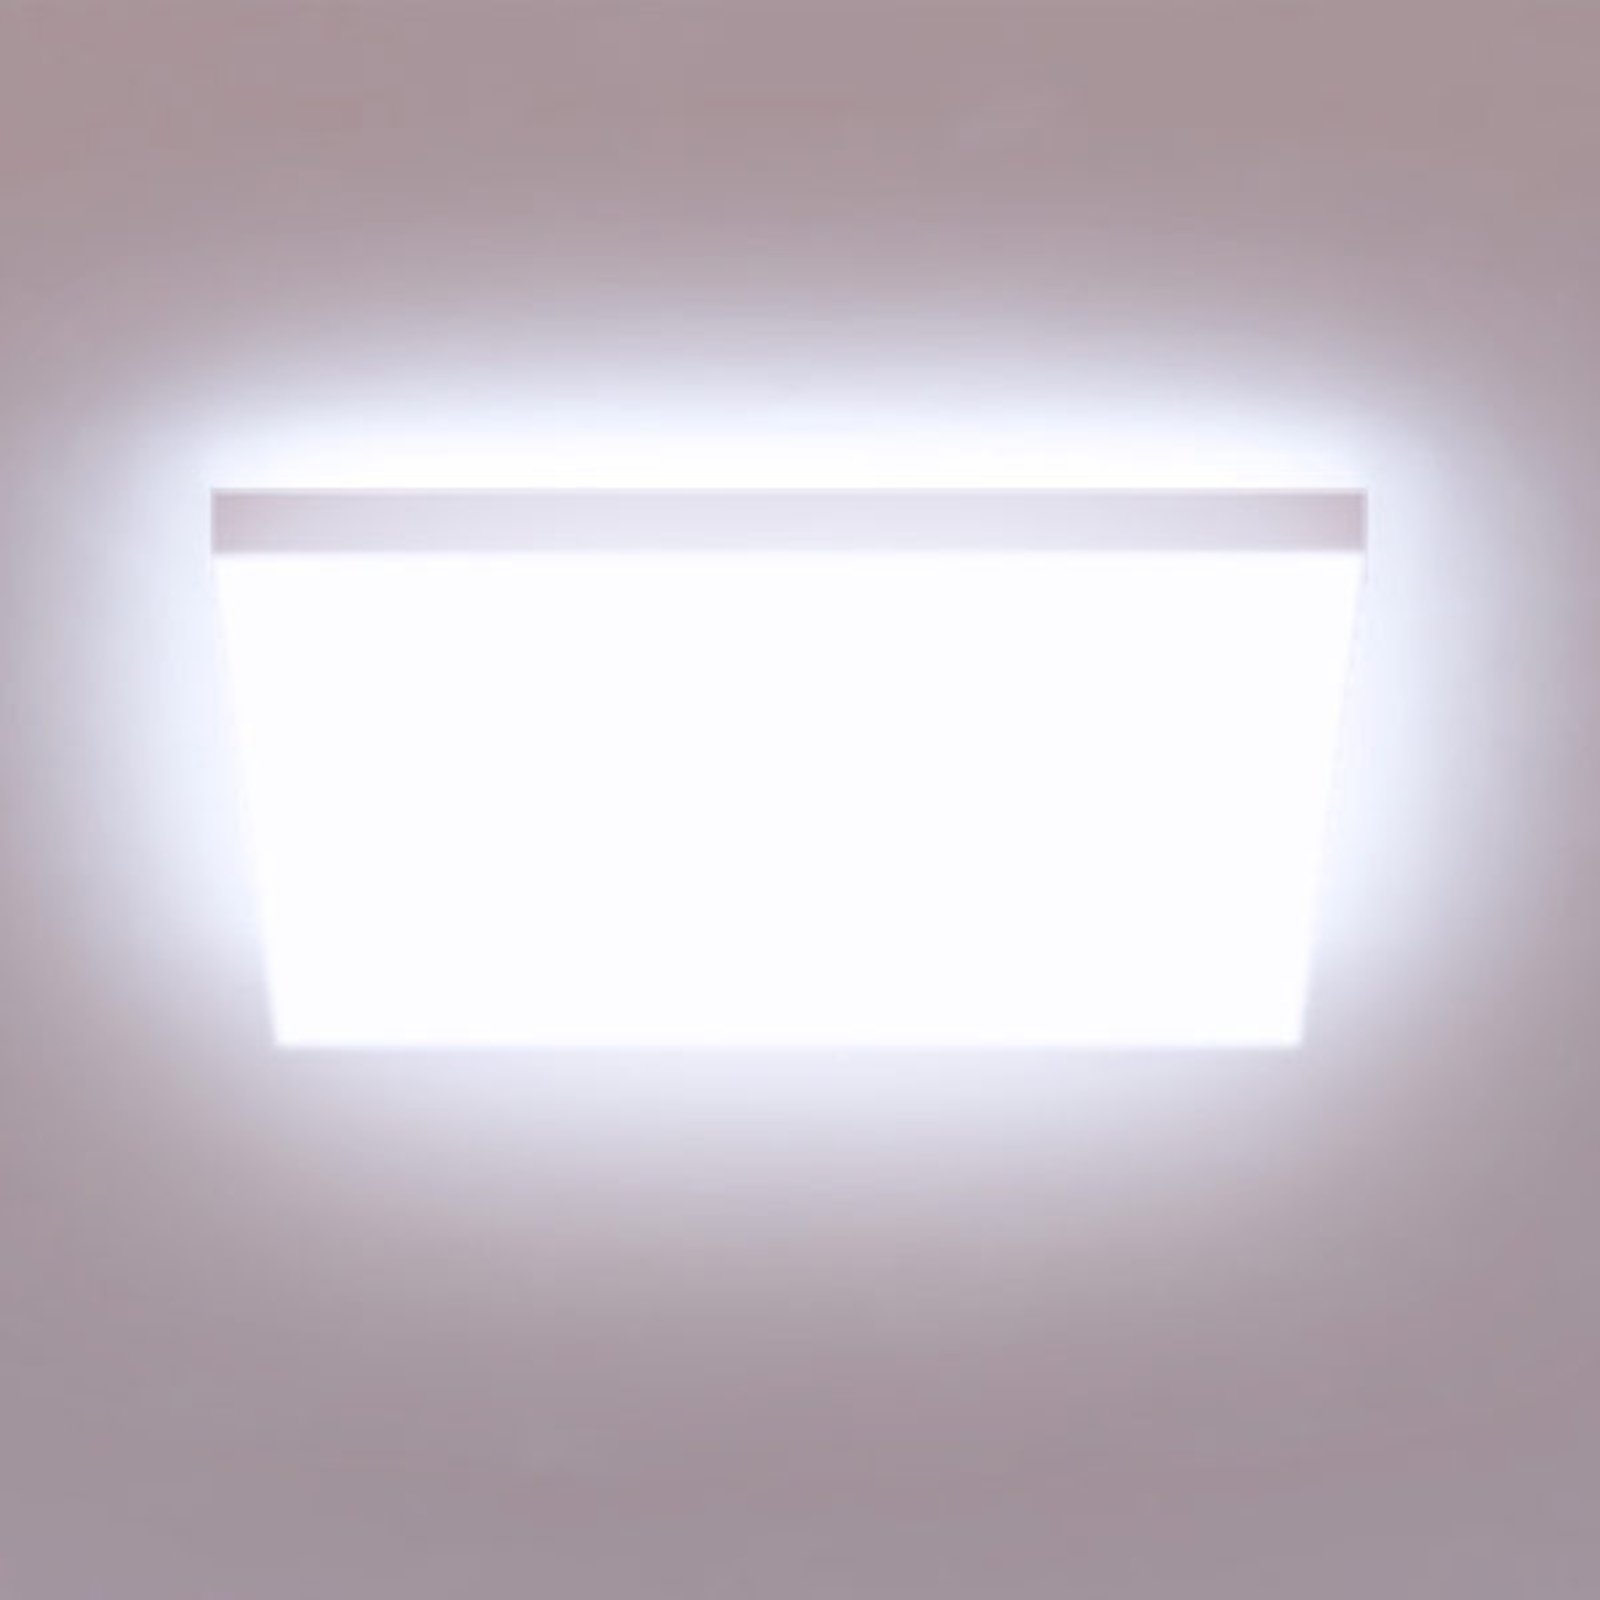 Müller Licht tint LED-panel Loris, 45 x 45 cm